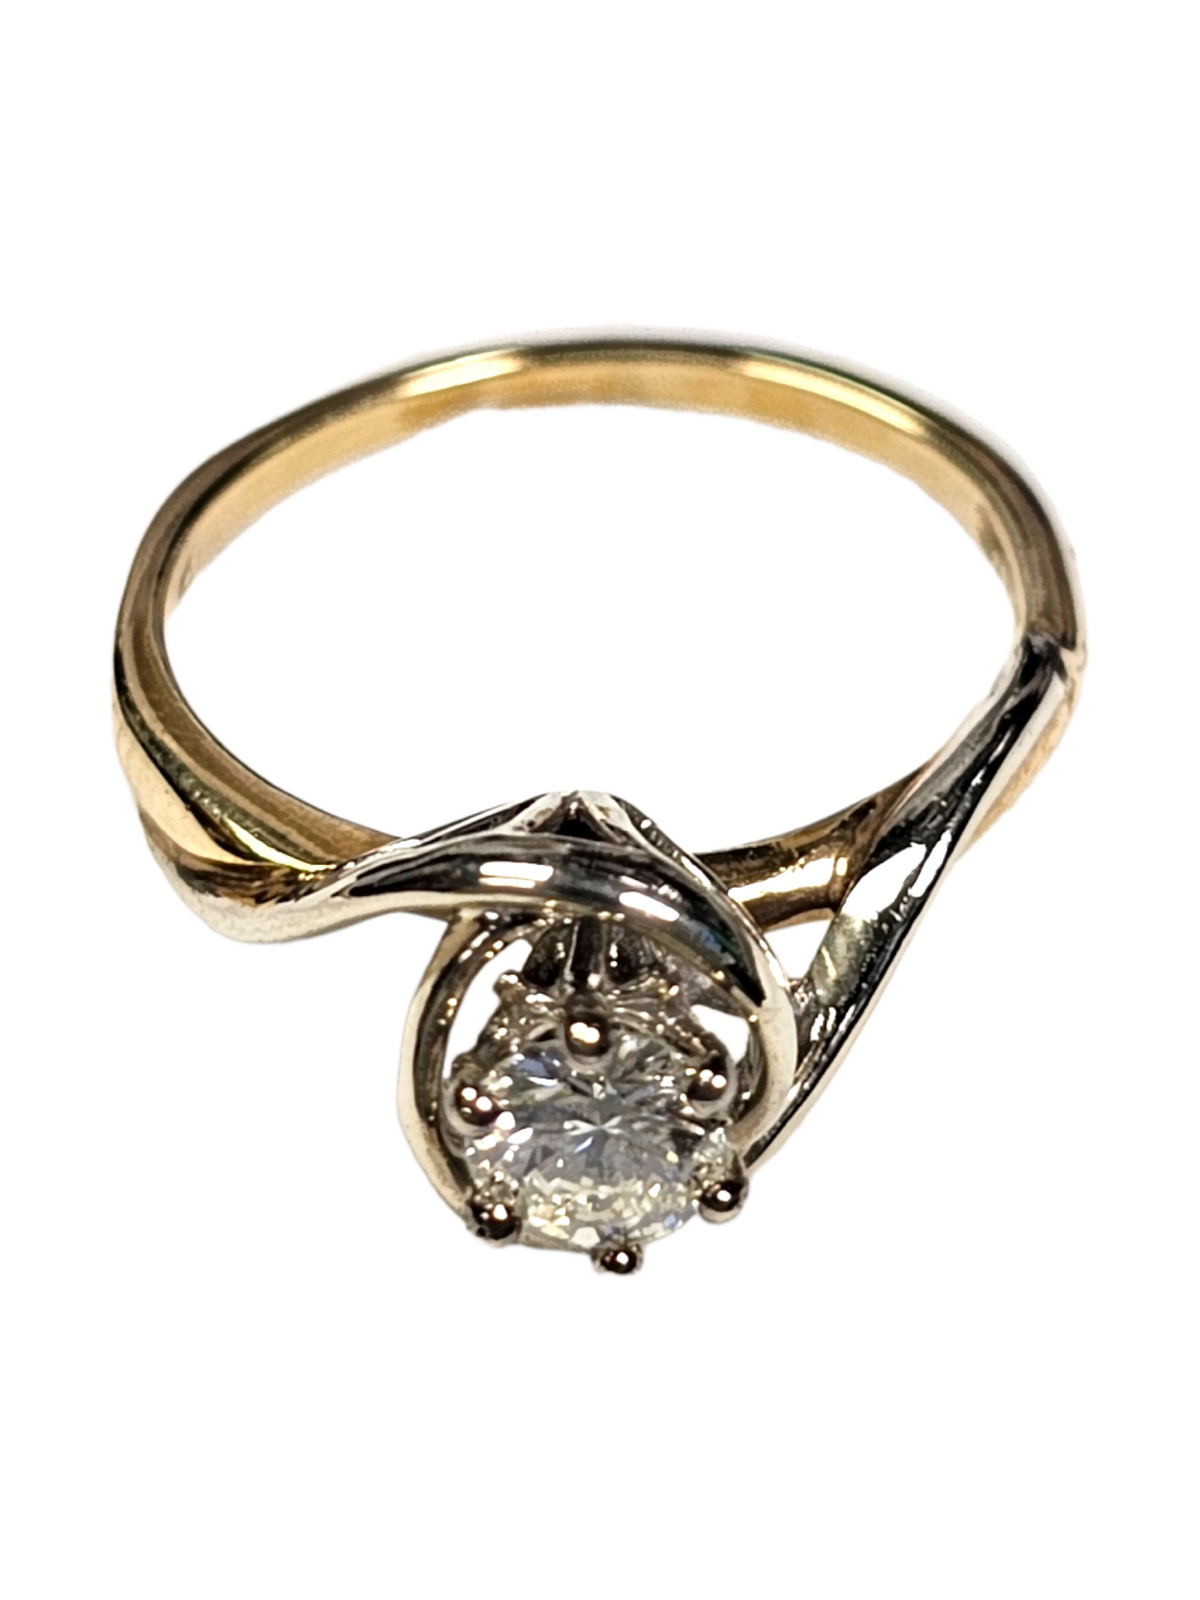 14K Yellow Gold Solitaire Diamond Women's Engagement Ring